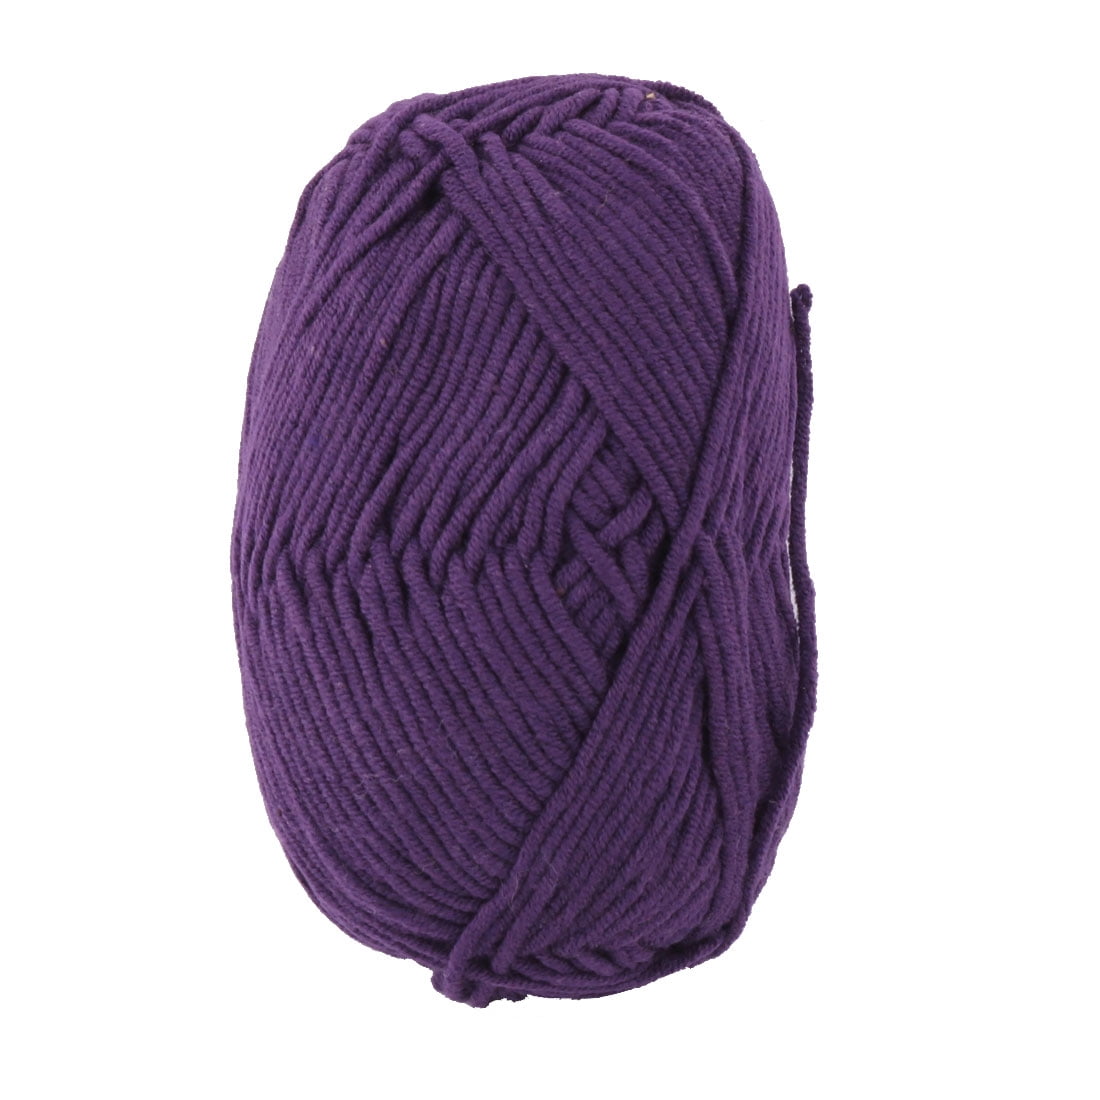 Incraftables Assorted Acrylic Yarn Skeins Set. Crochet Yarn Set w/ 18pcs  Skein Bundle (22 Yards), Crochet Hooks, Needles, Stitch Markers & Bag. Yarn  Variety Pack Kit for Amigurumi & Crocheting Project